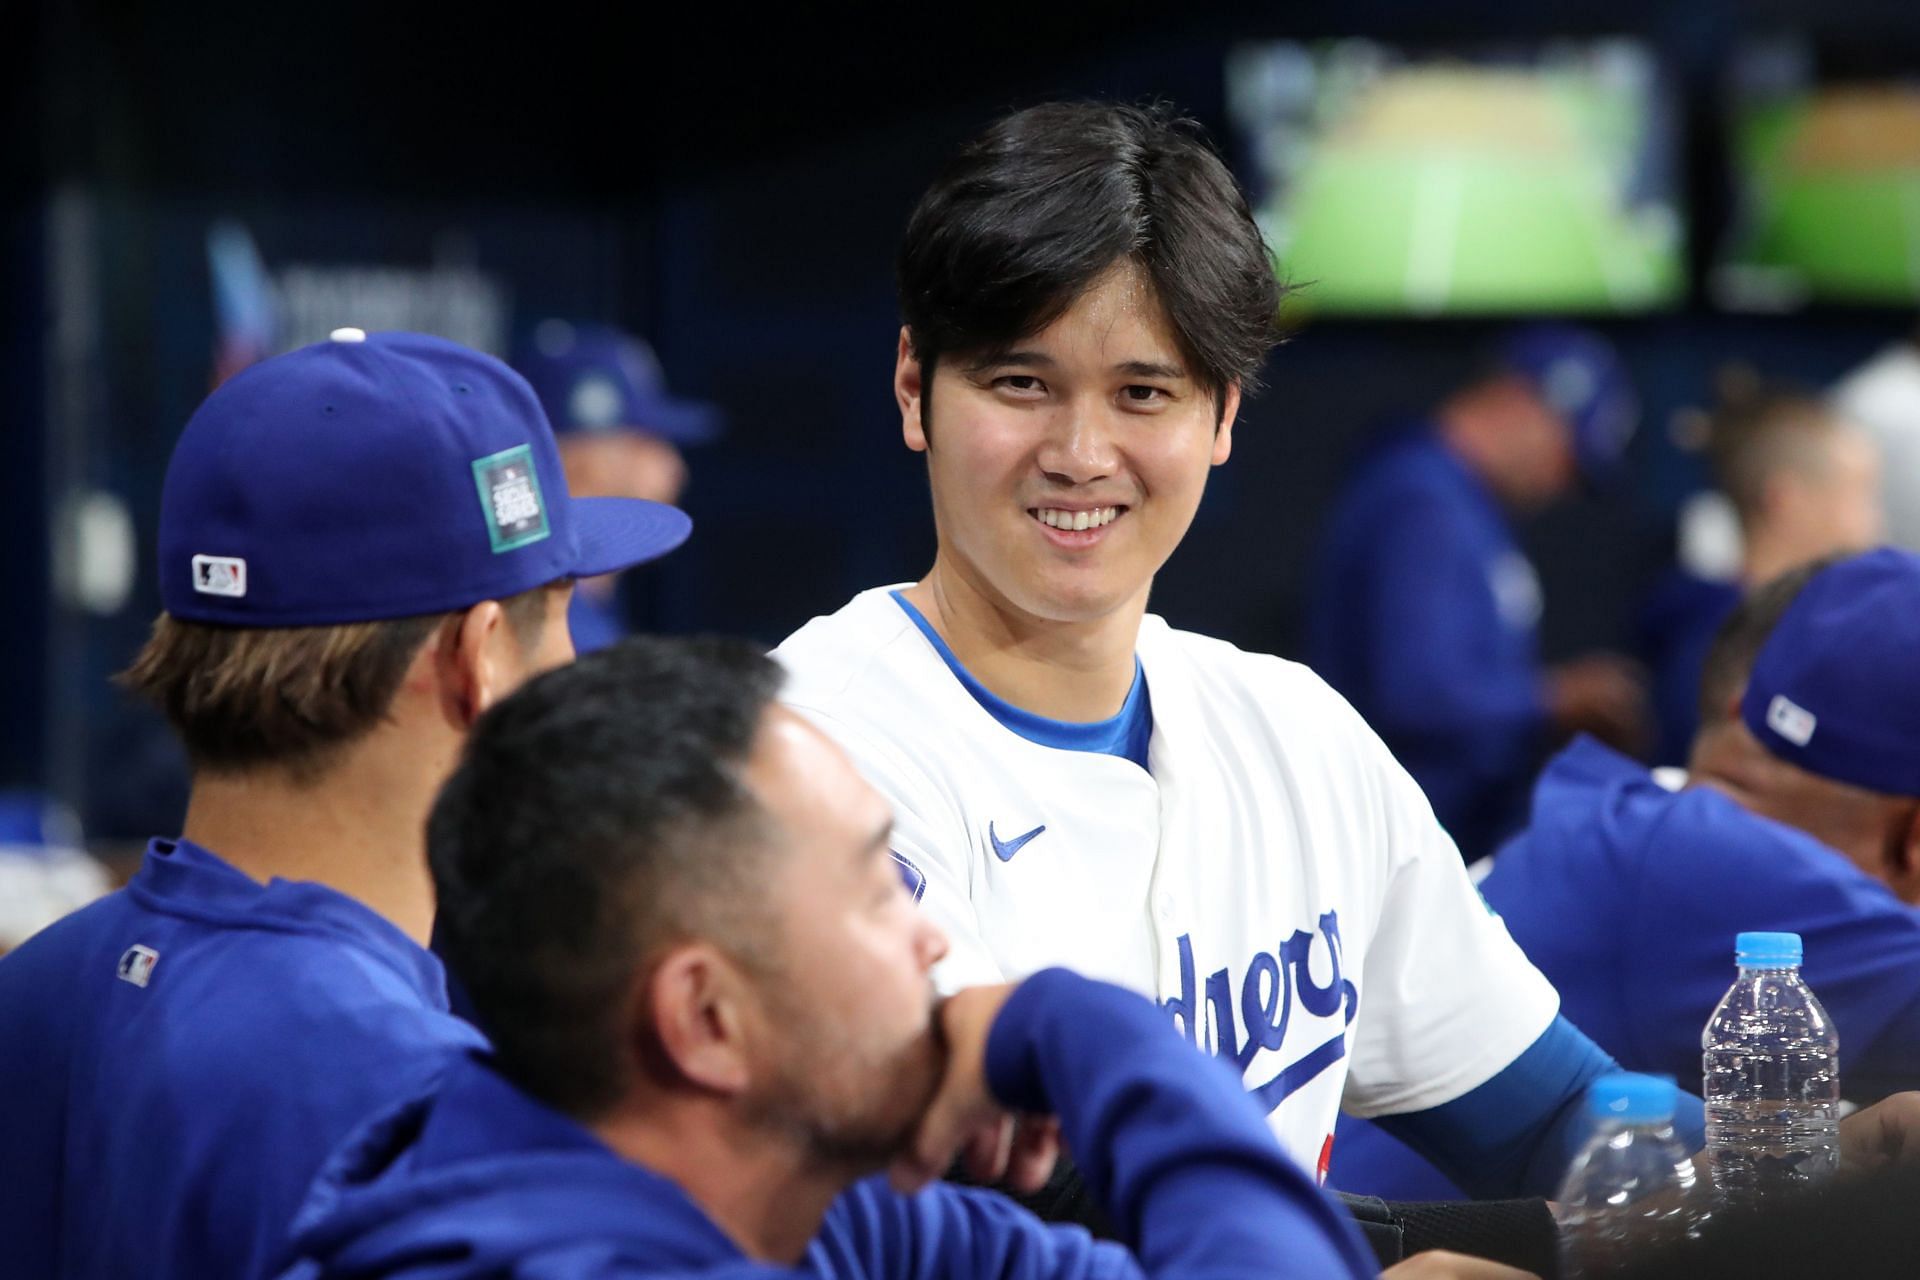 Shohei Ohtani is not facing MLB discipline